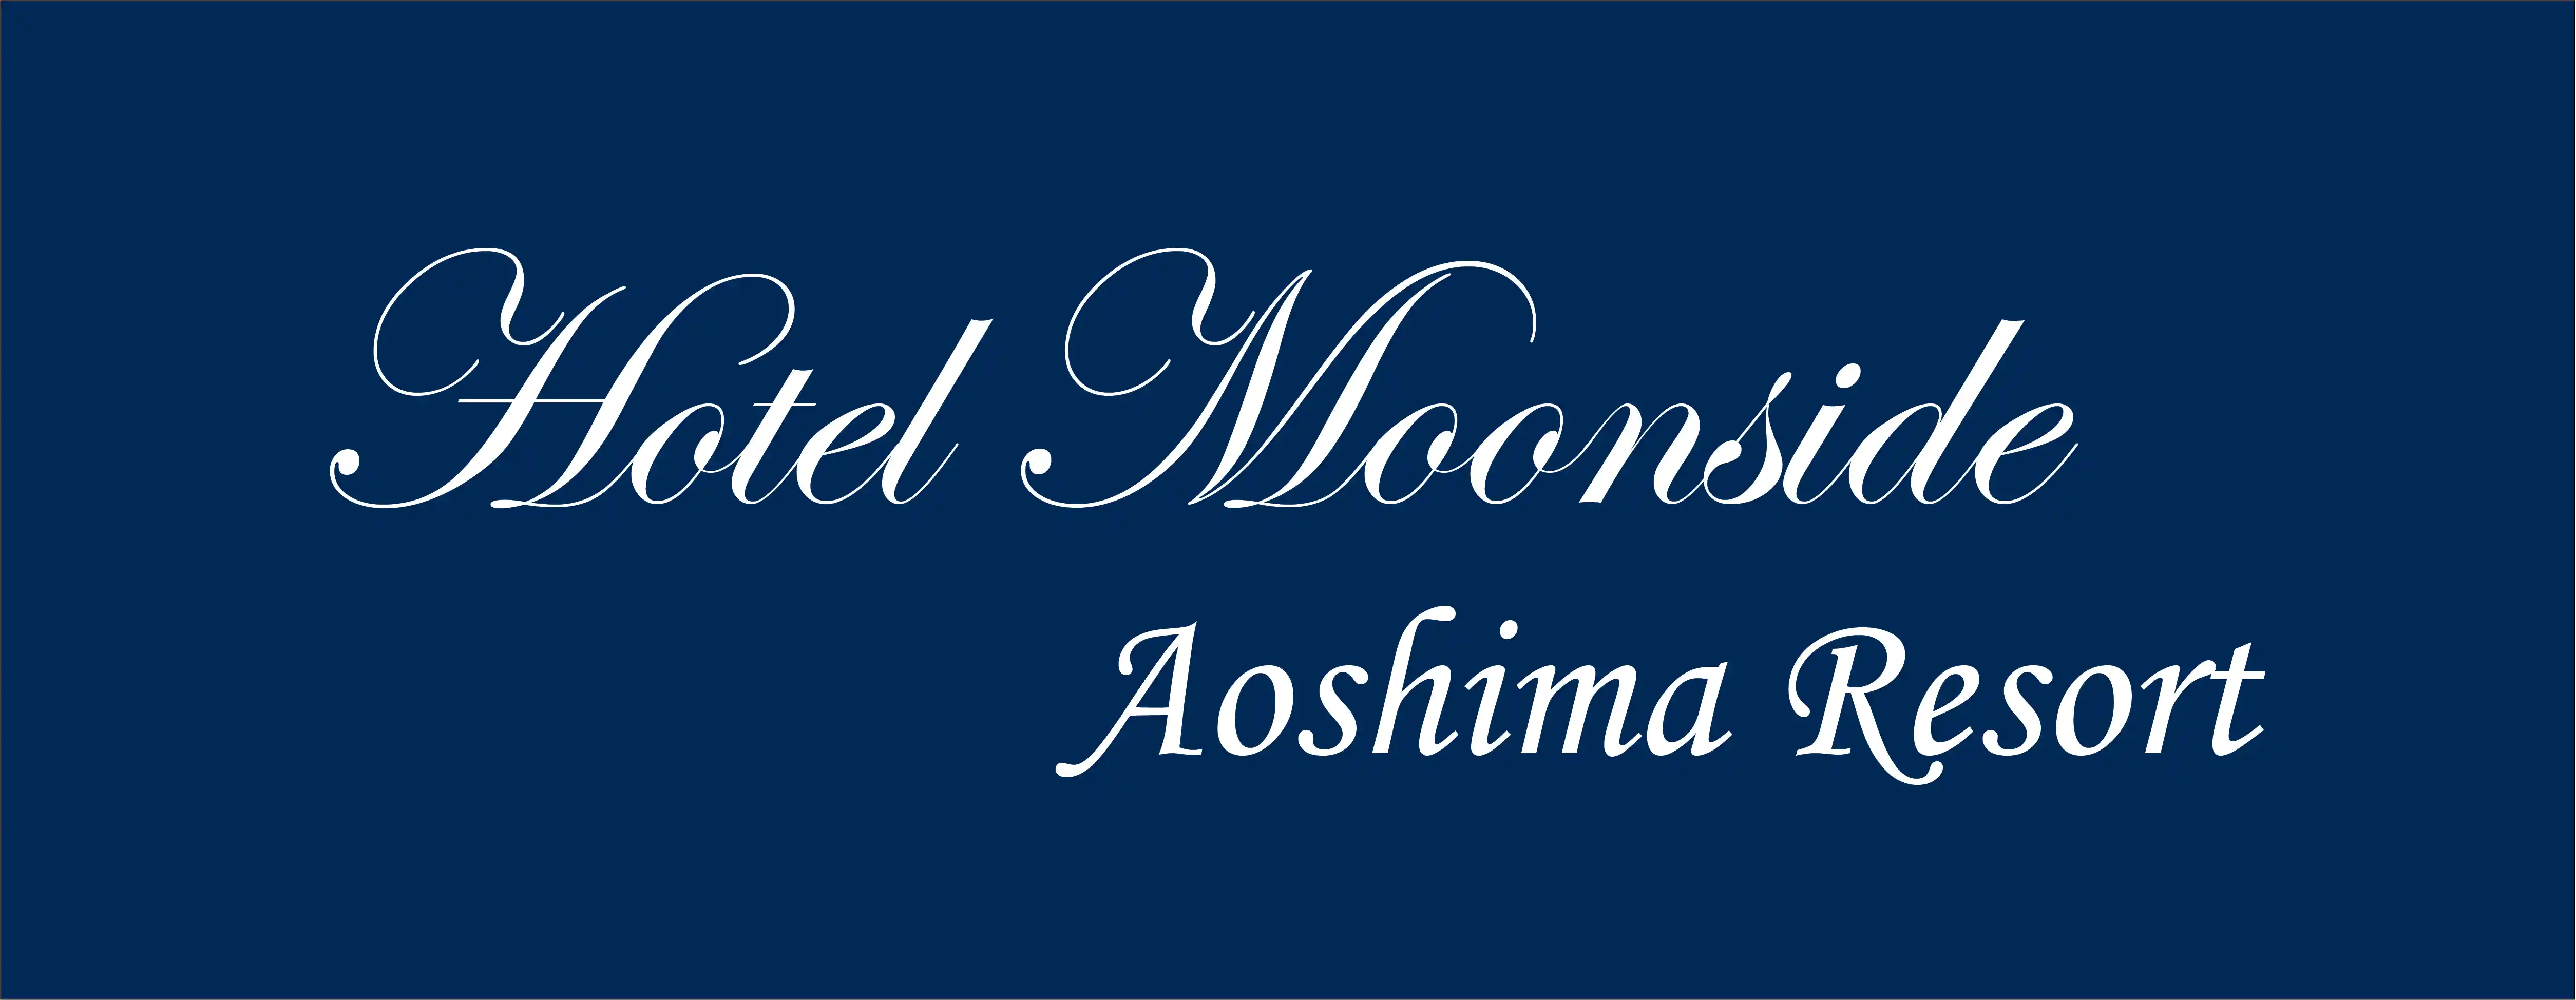 Hotel Moonside Resorts Aoshima.png